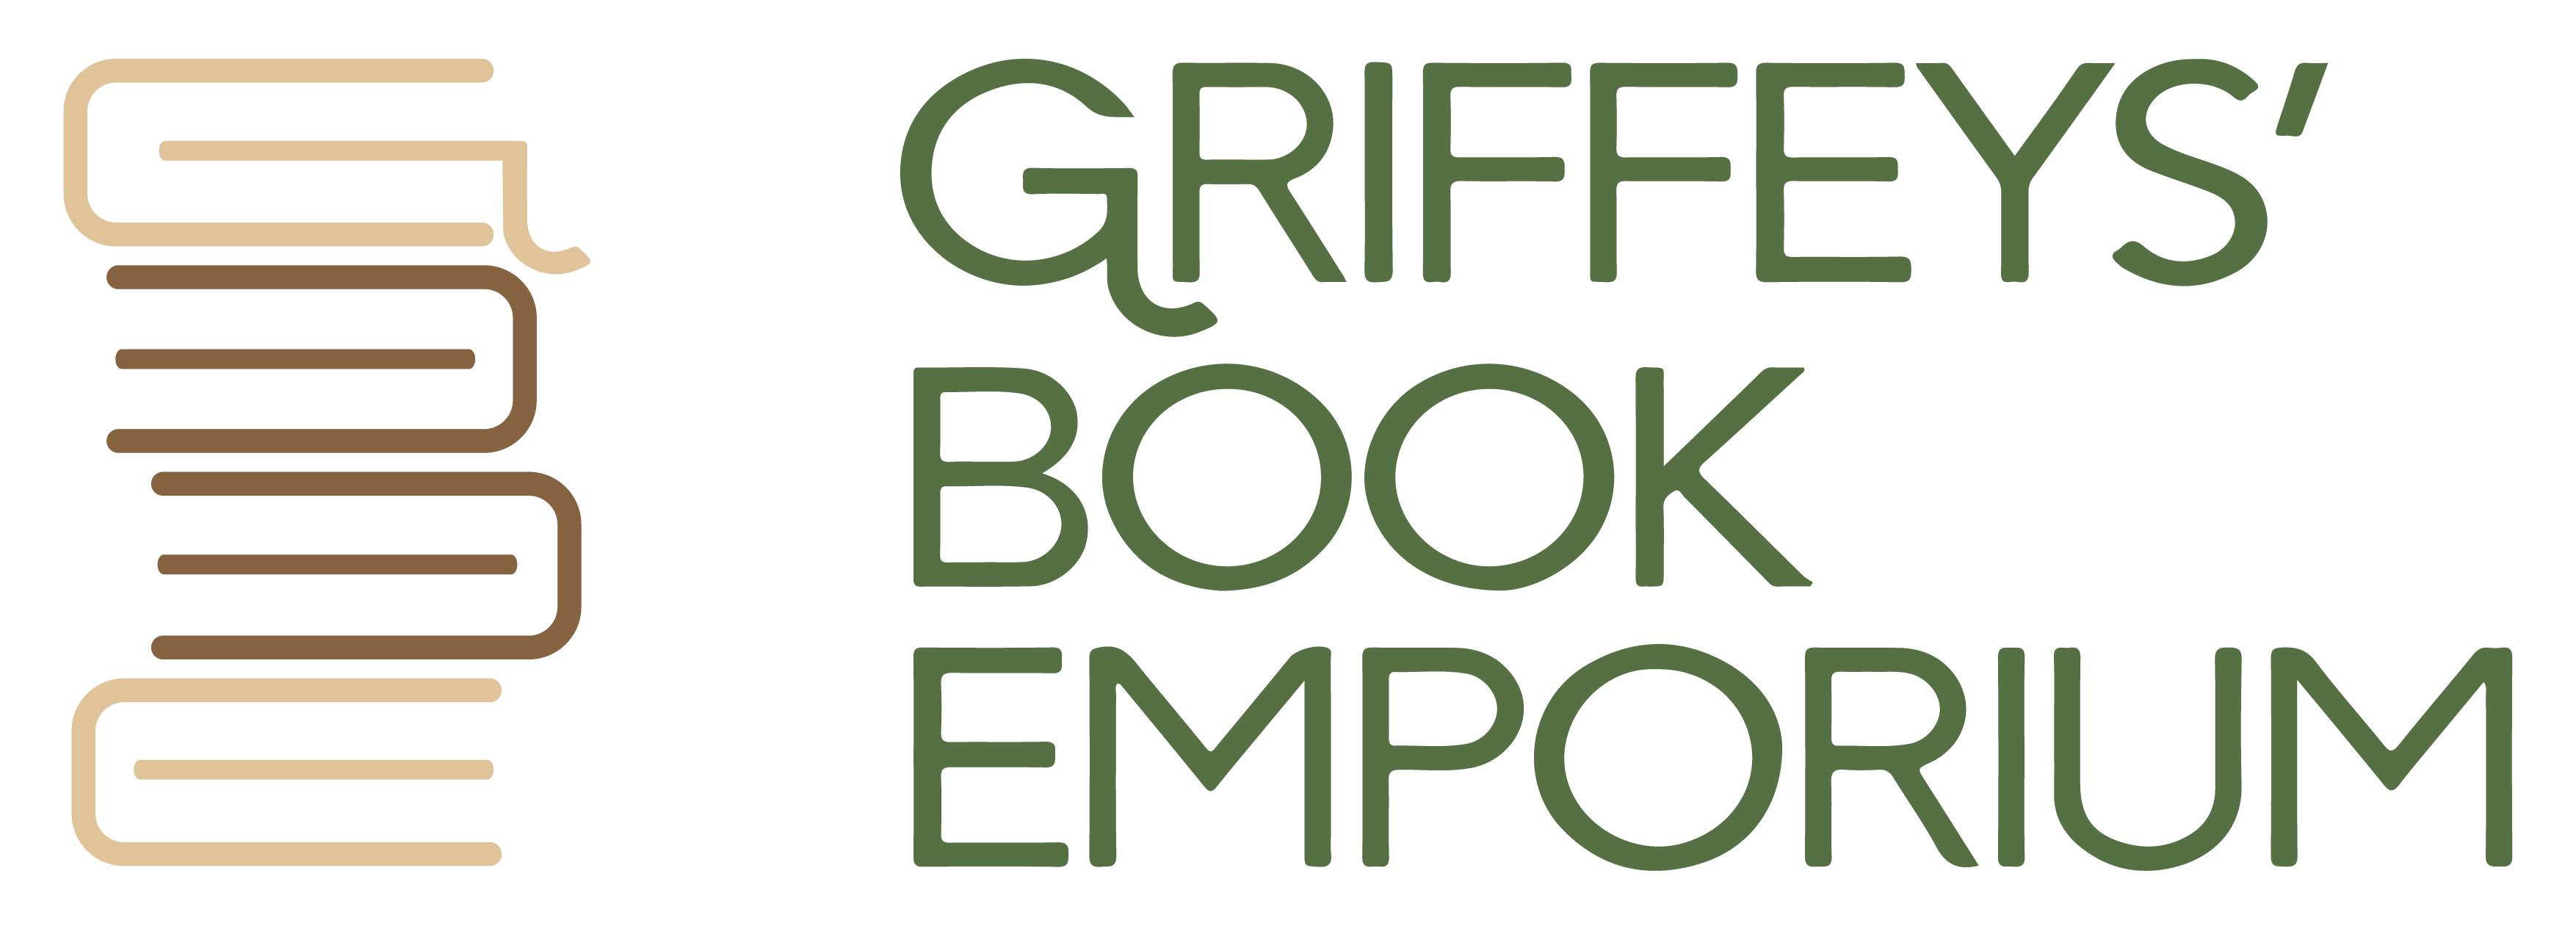 Griffeys' Book Emporium